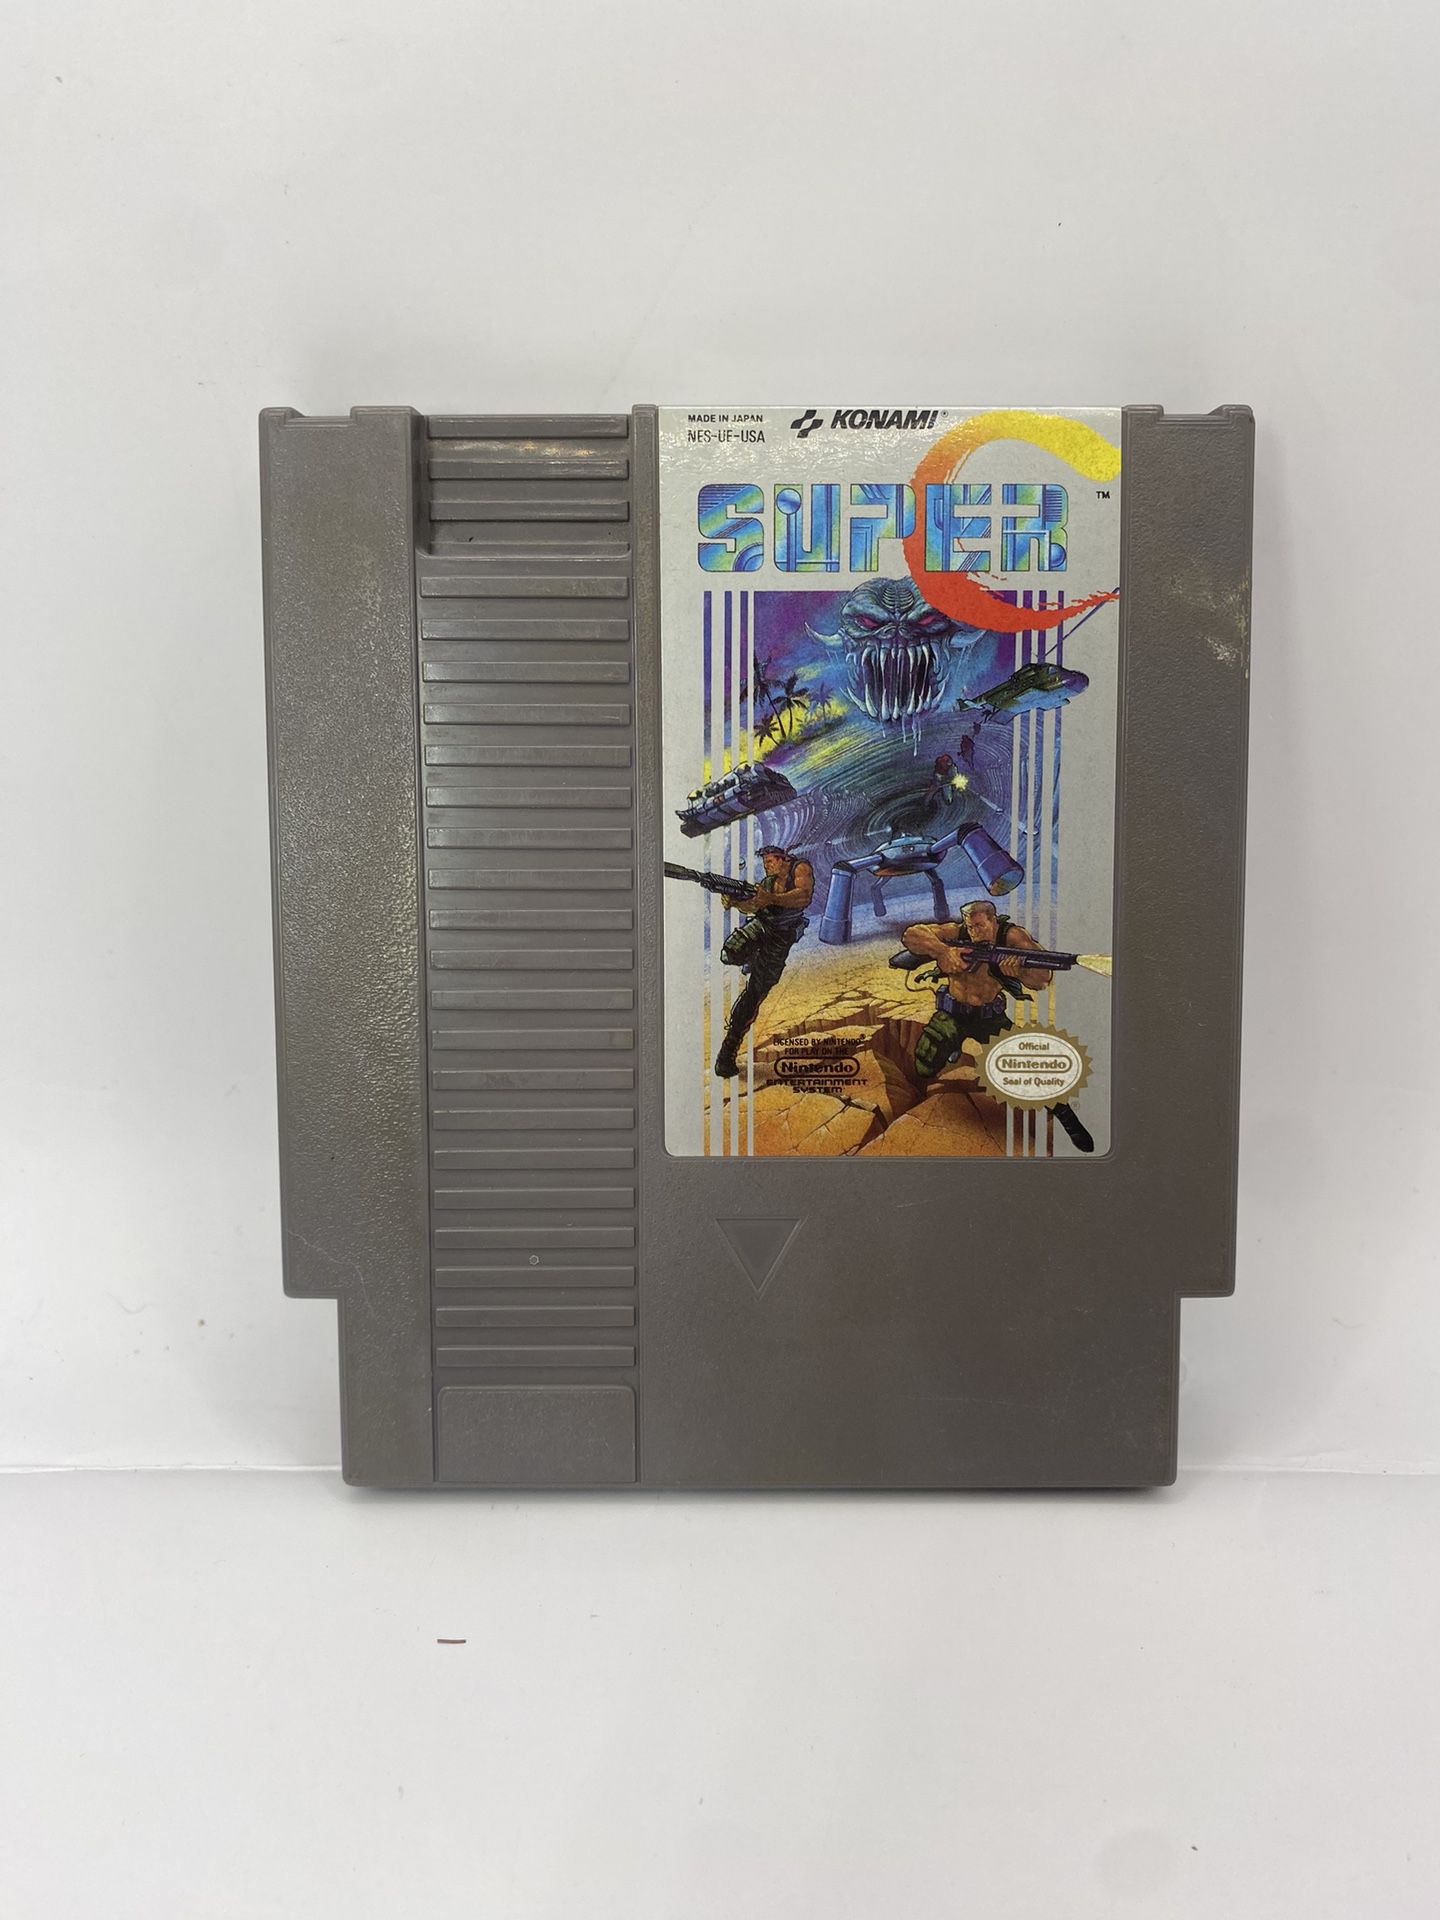 Super C Contra Nintendo Entertainment System NES 1988 Authentic Cartridge Tested